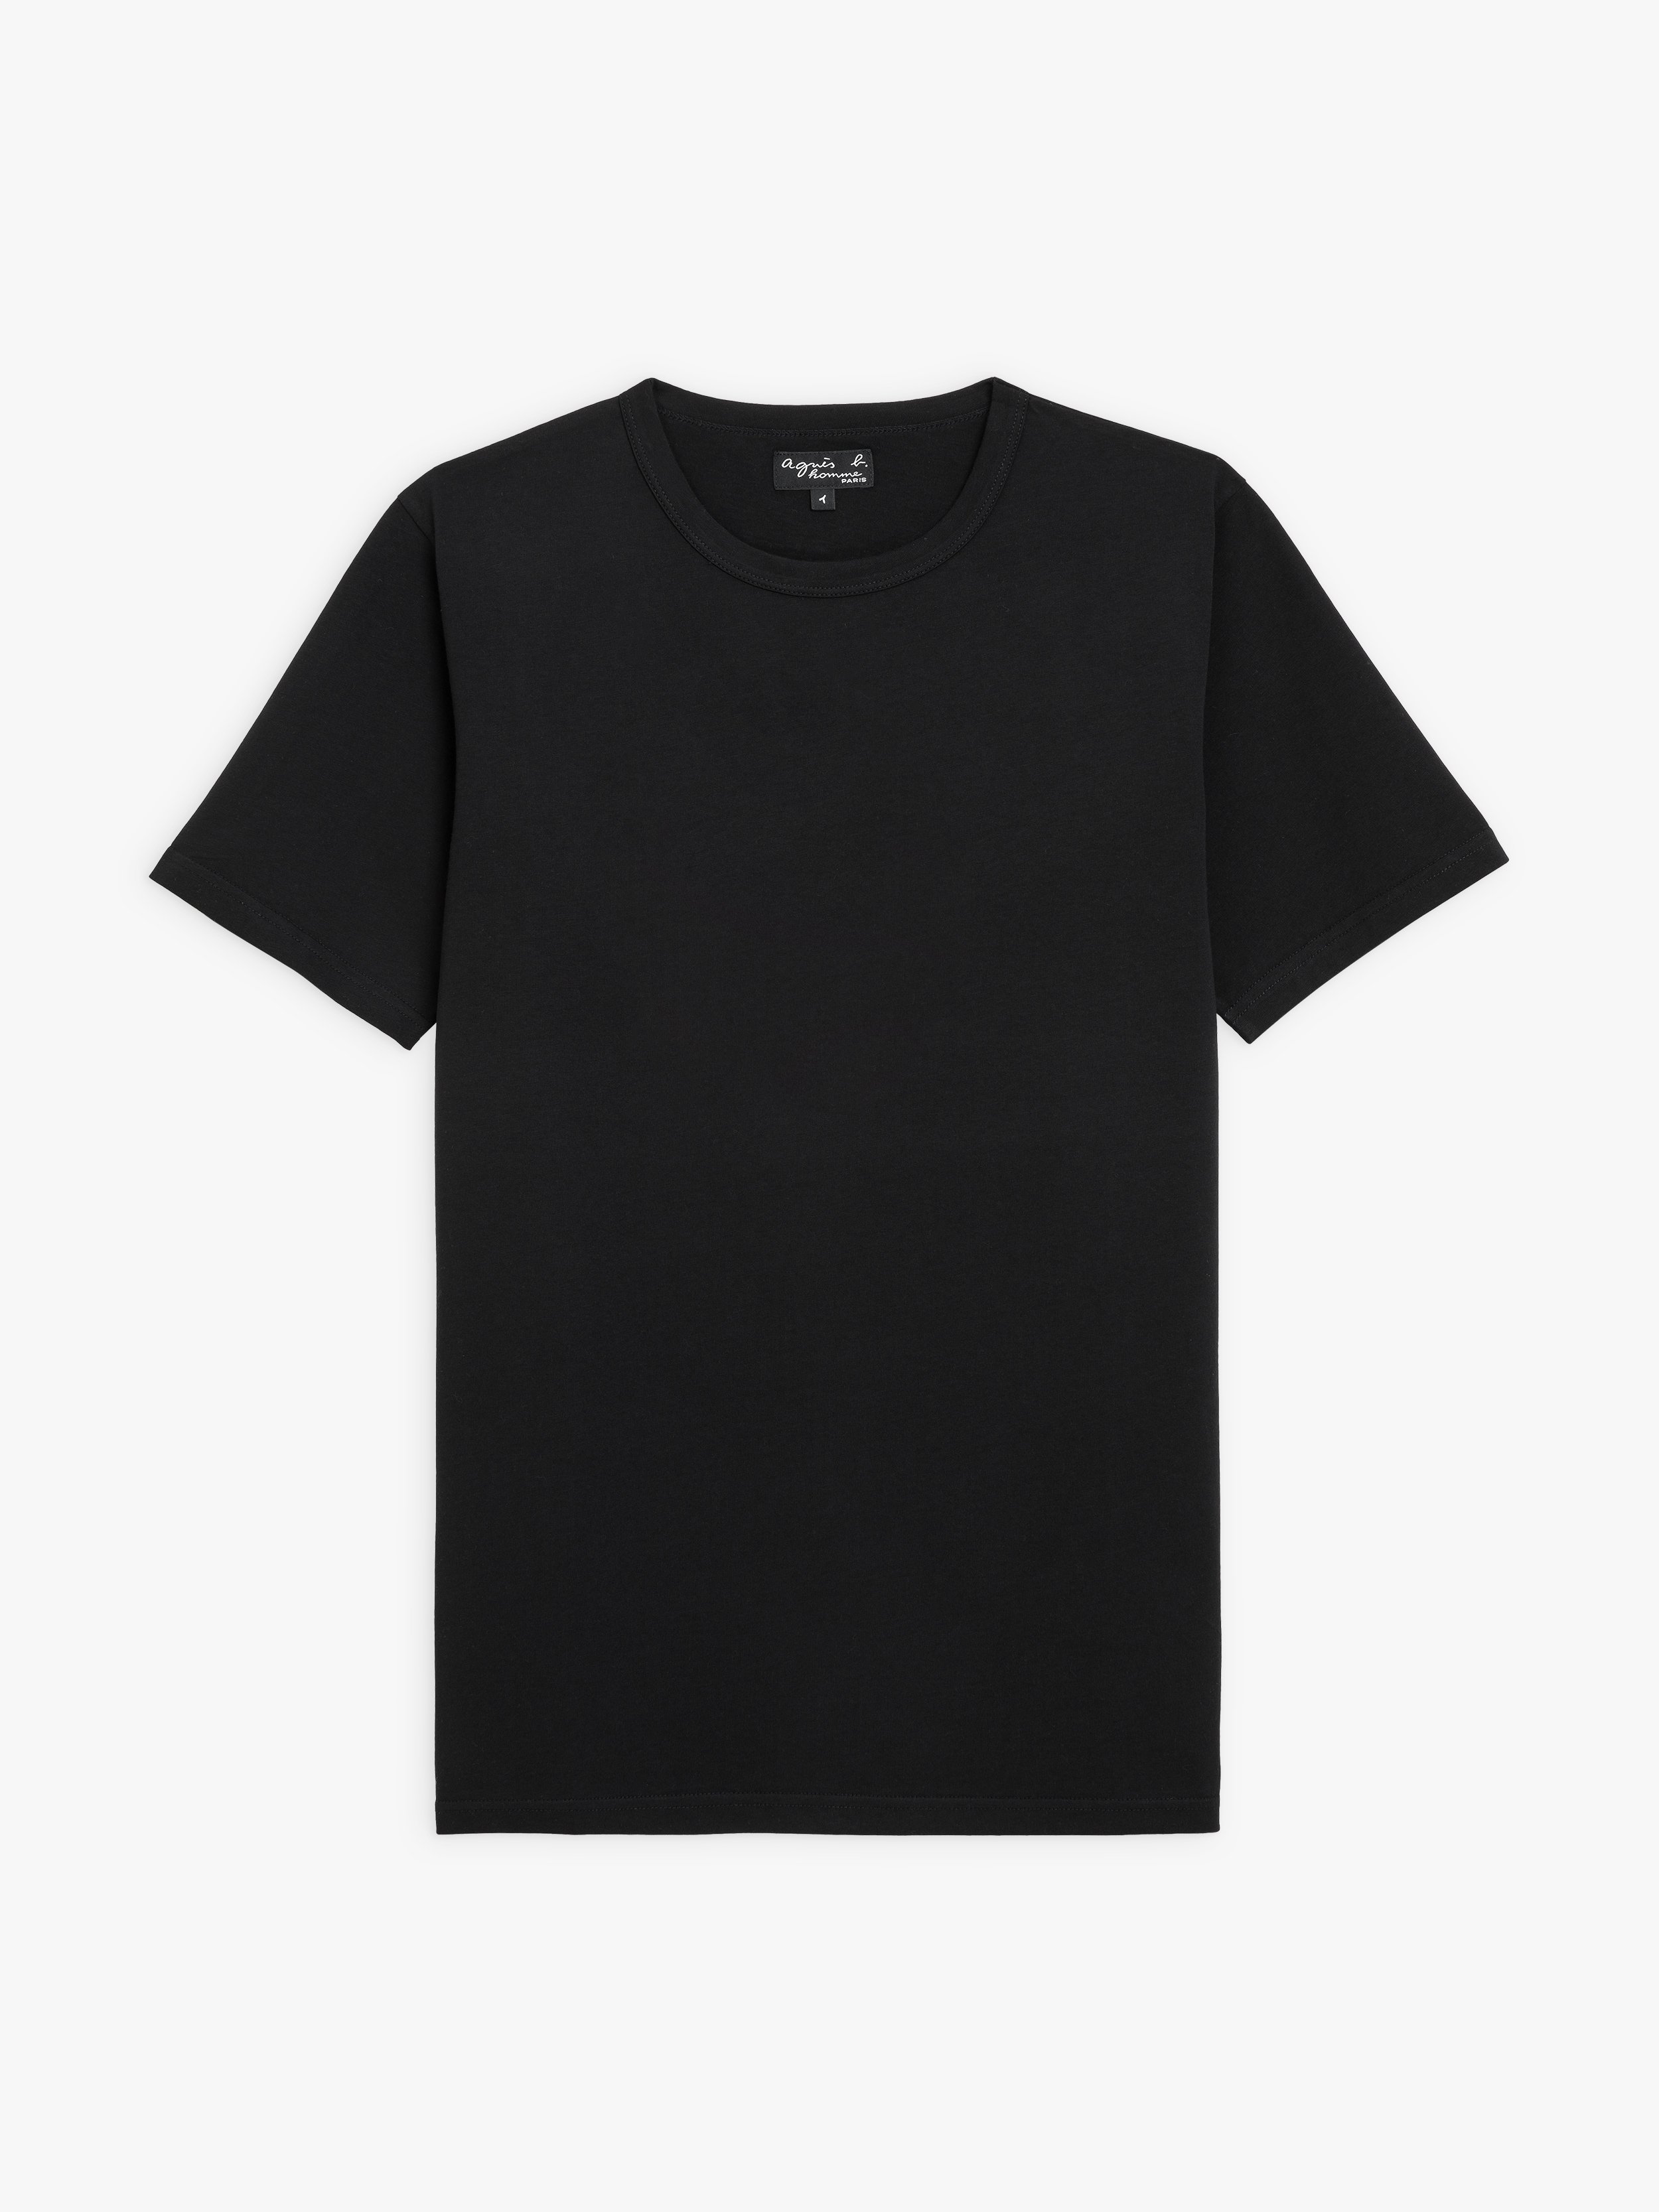 droogte Conserveermiddel onderwerp black short sleeves Coulos t-shirt | agnès b.